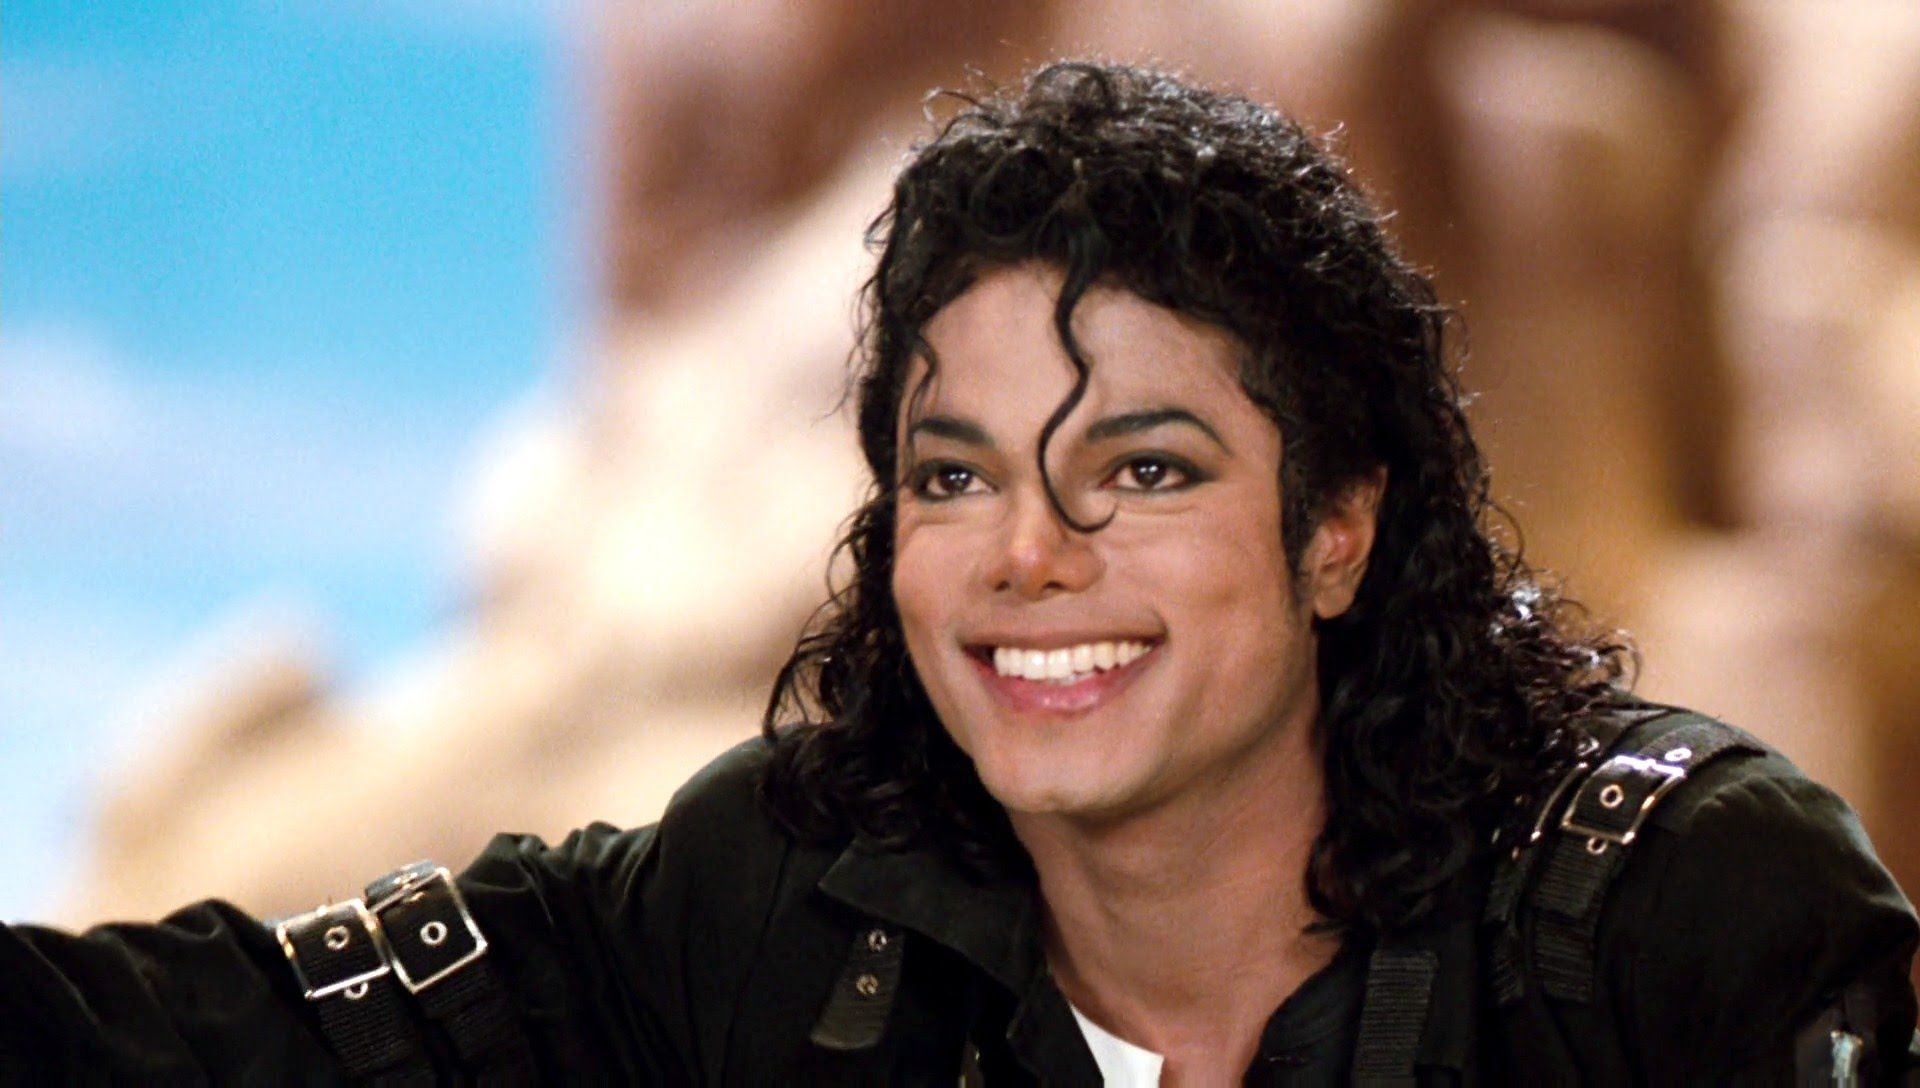 Happy Birthday to The King Of Pop, Michael Jackson! 